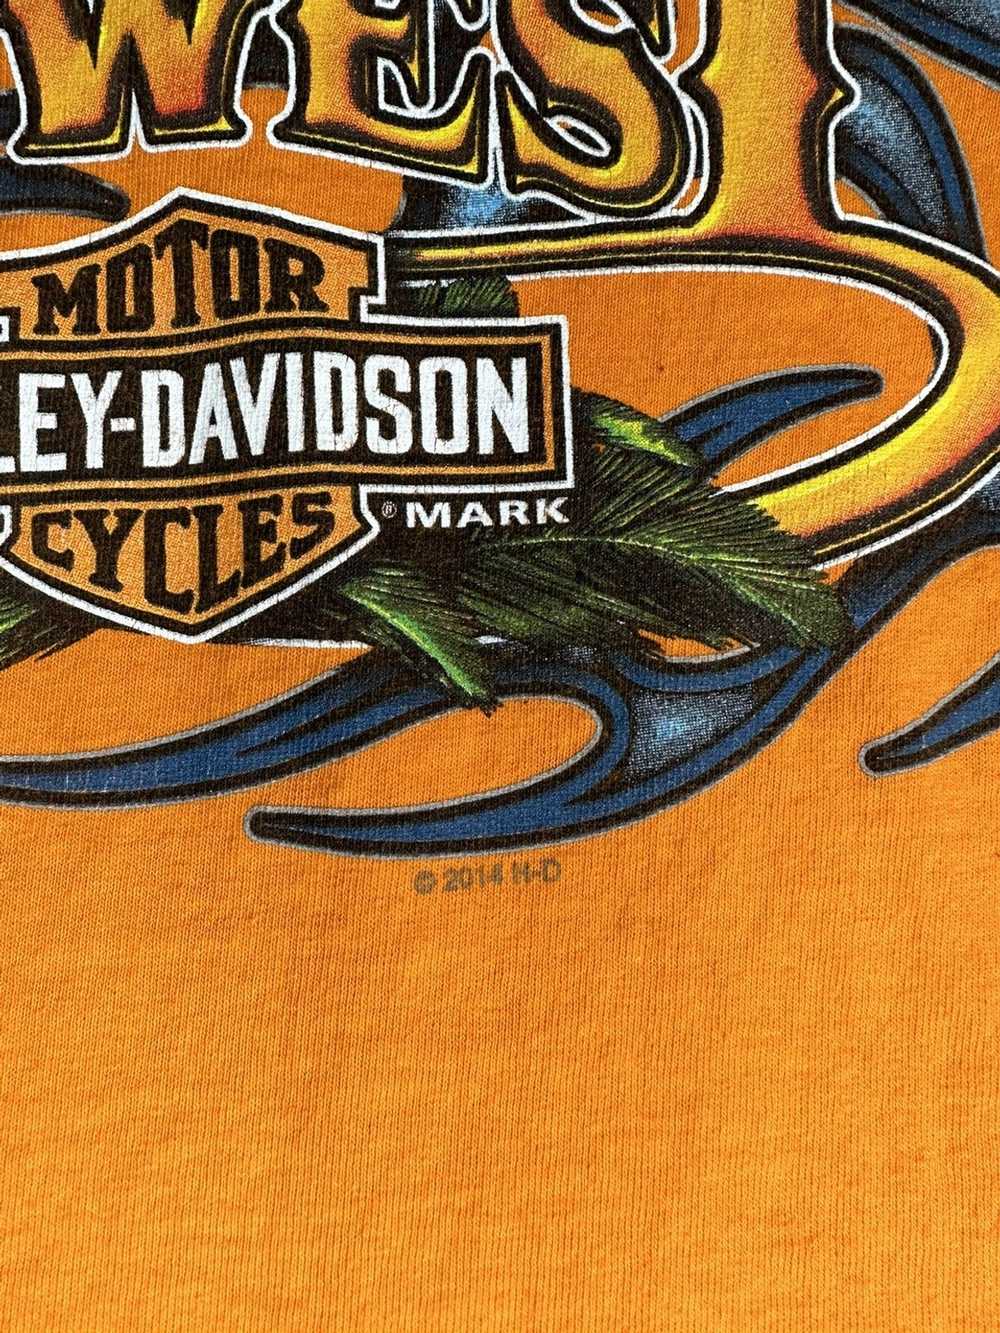 Harley Davidson Harley Davidson Key West Tee - image 3